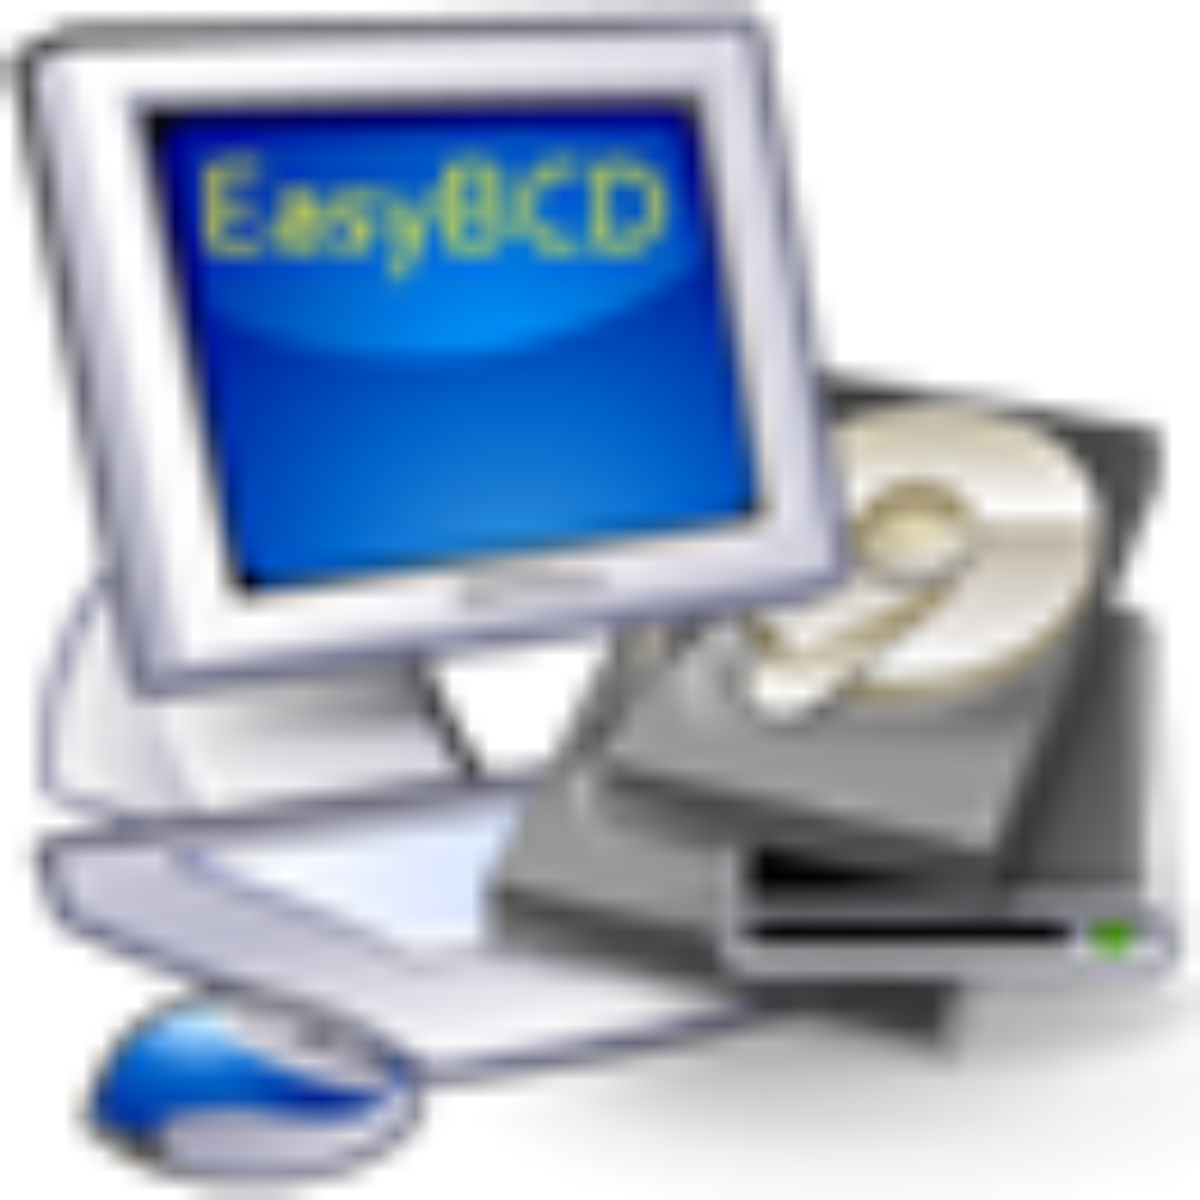 easybcd for ubuntu free download